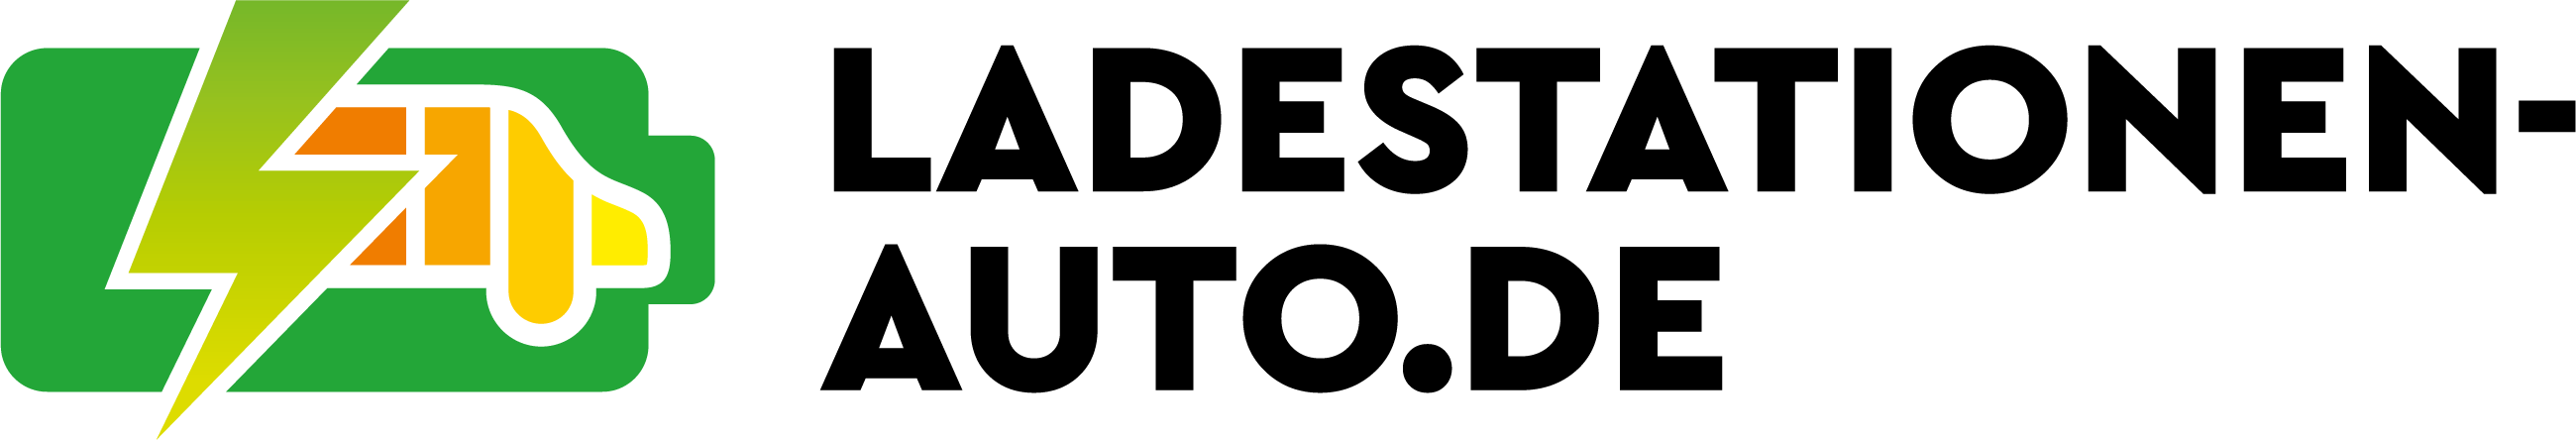 ladestationen-auto-de-logo